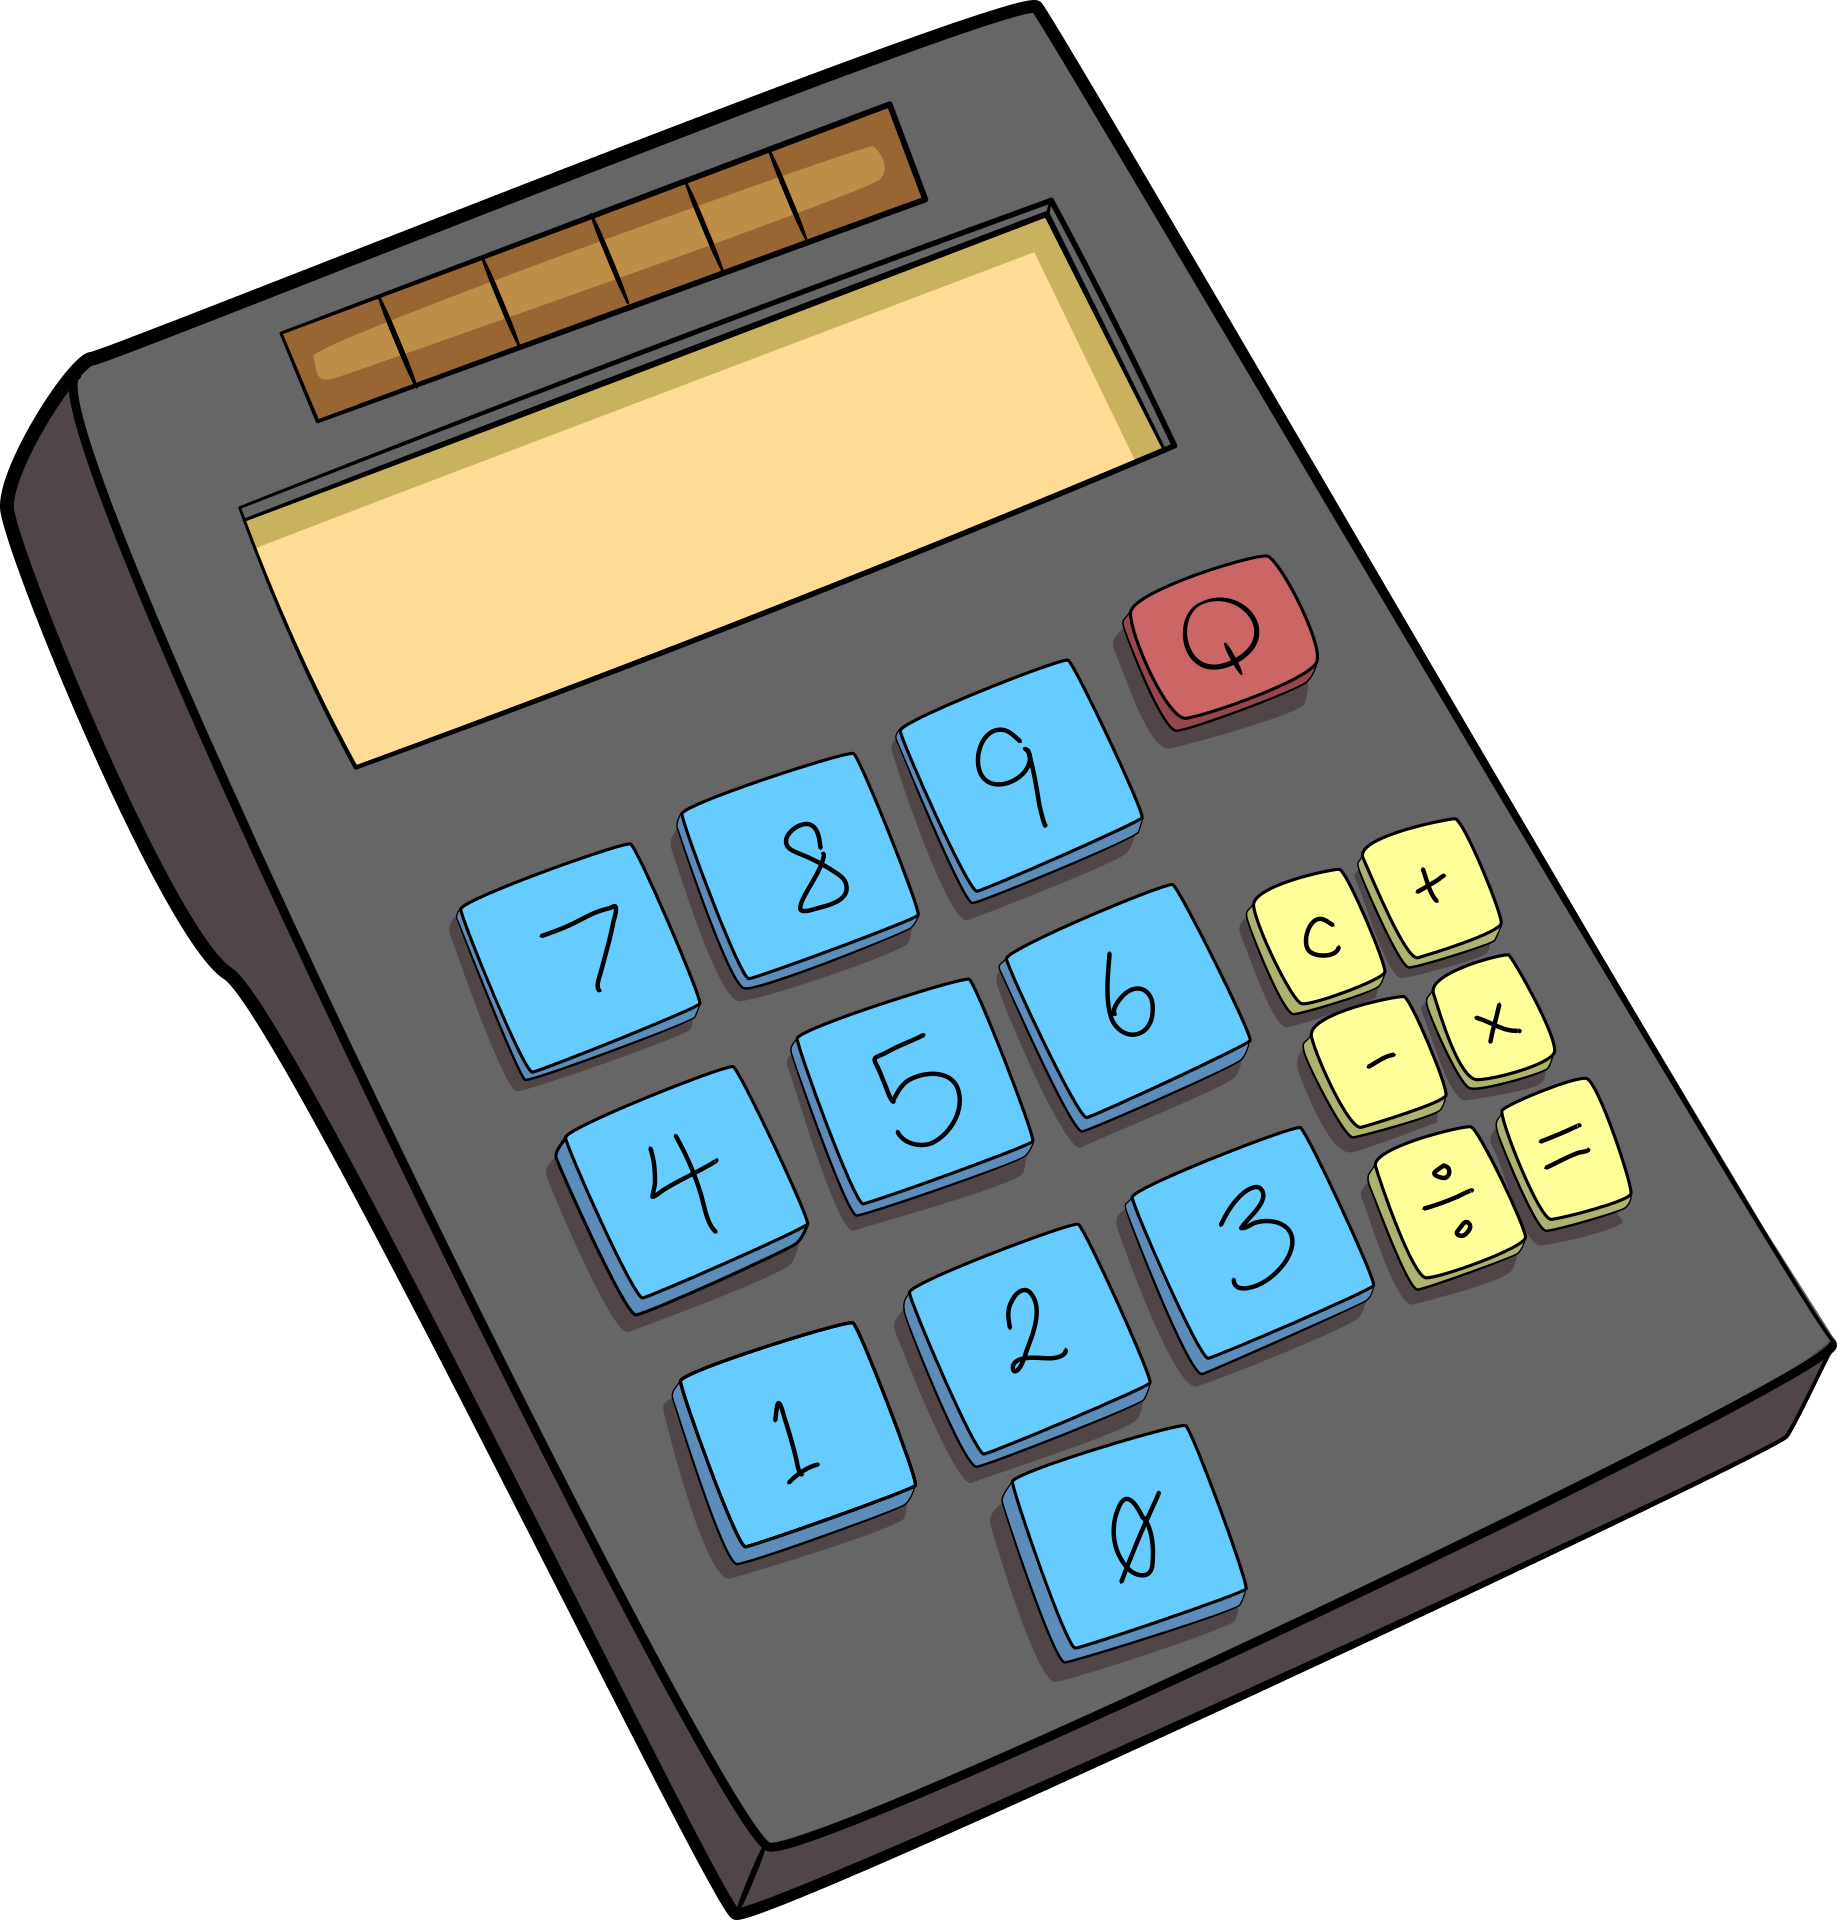 Калькулятора cs. Калькулятор нарисованный. Калькулятор рисунок. Микрокалькулятор. Калькулятор для детей.